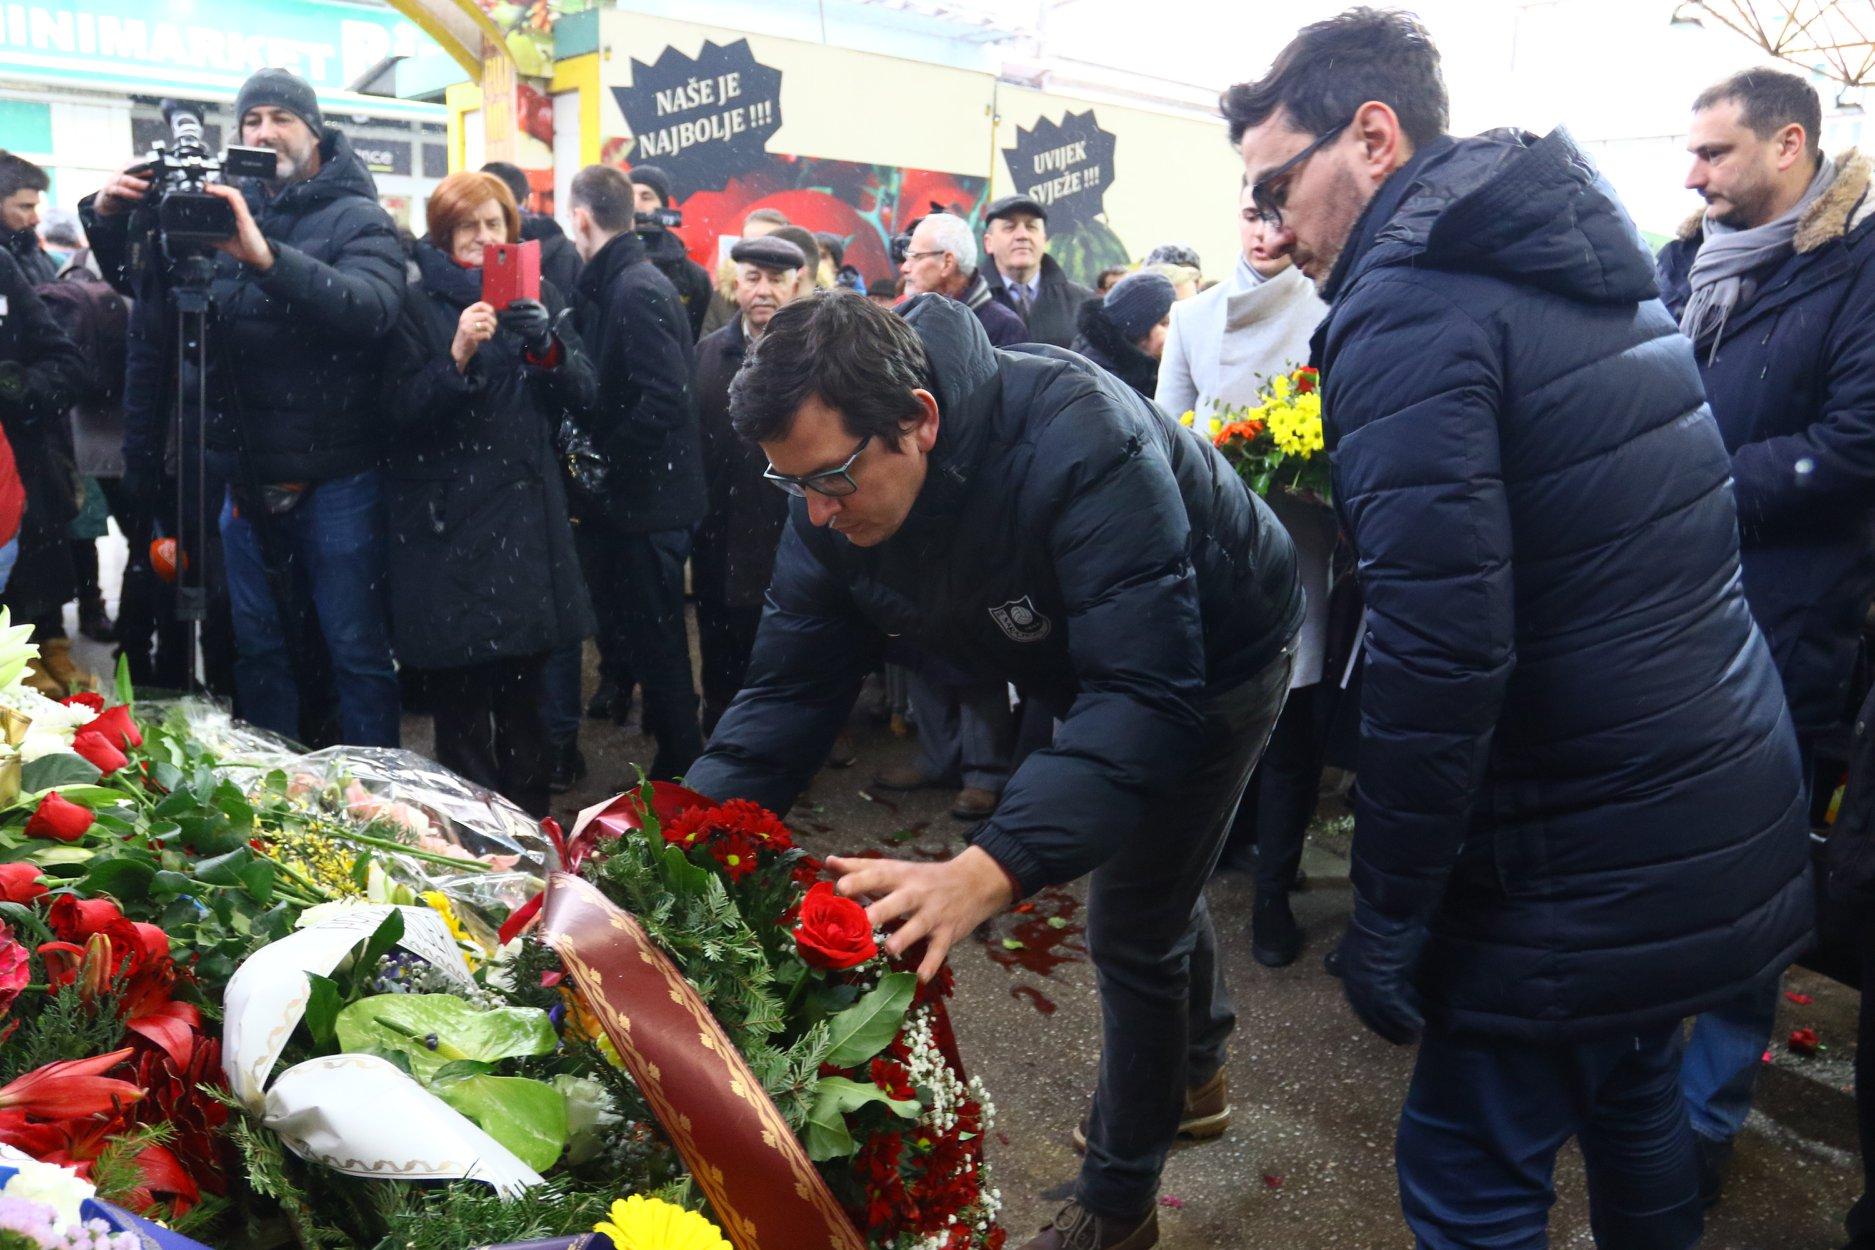 Polaganjem cvijeća na spomen-obilježje delegacija FK Sarajevo danas se prisjetila stradalih - Avaz